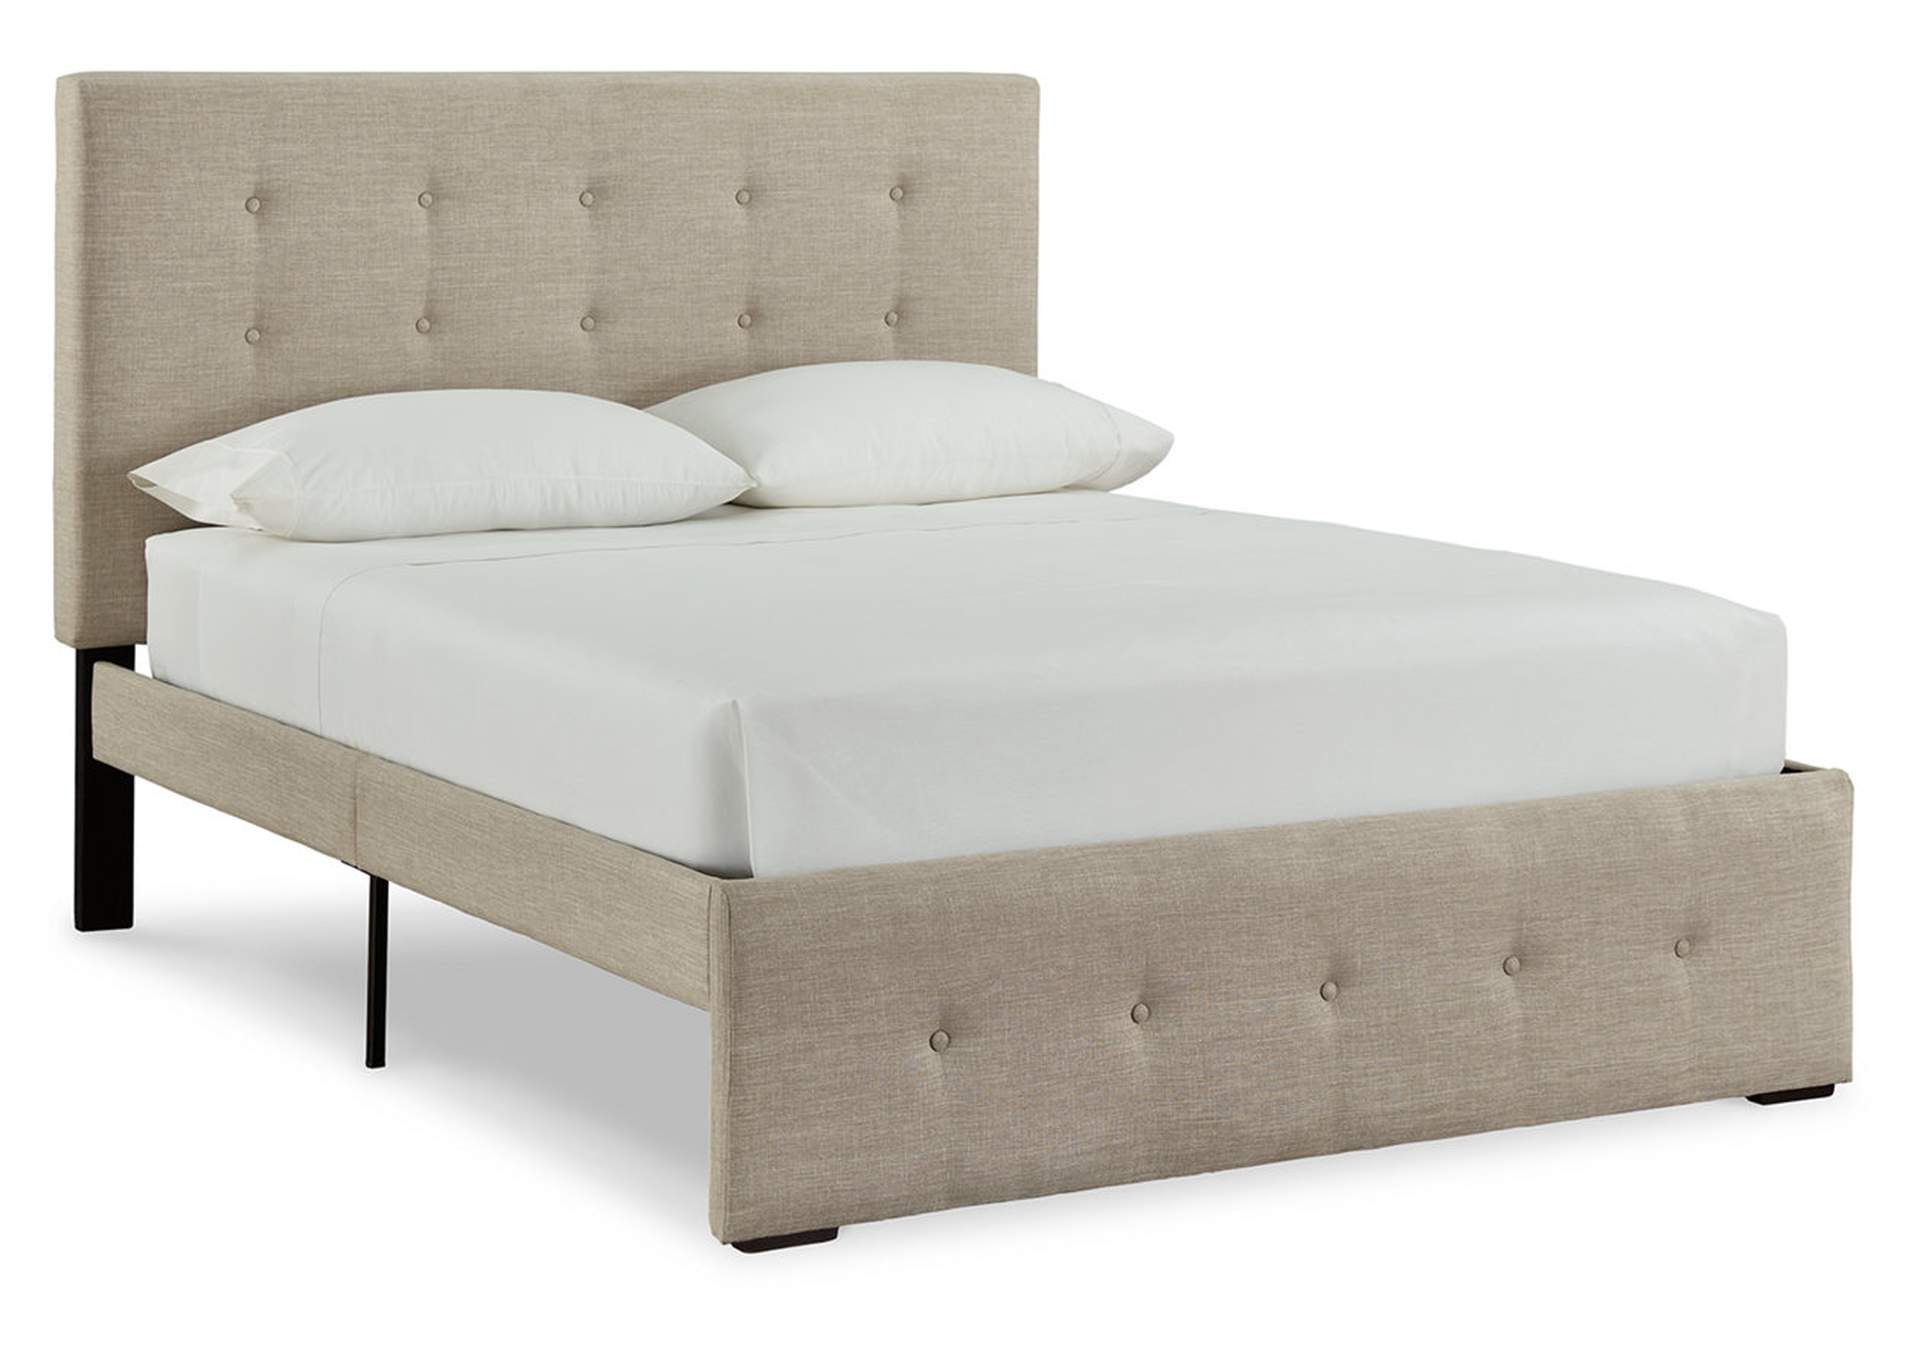 Gladdinson Full Upholstered Storage Bed,Ashley